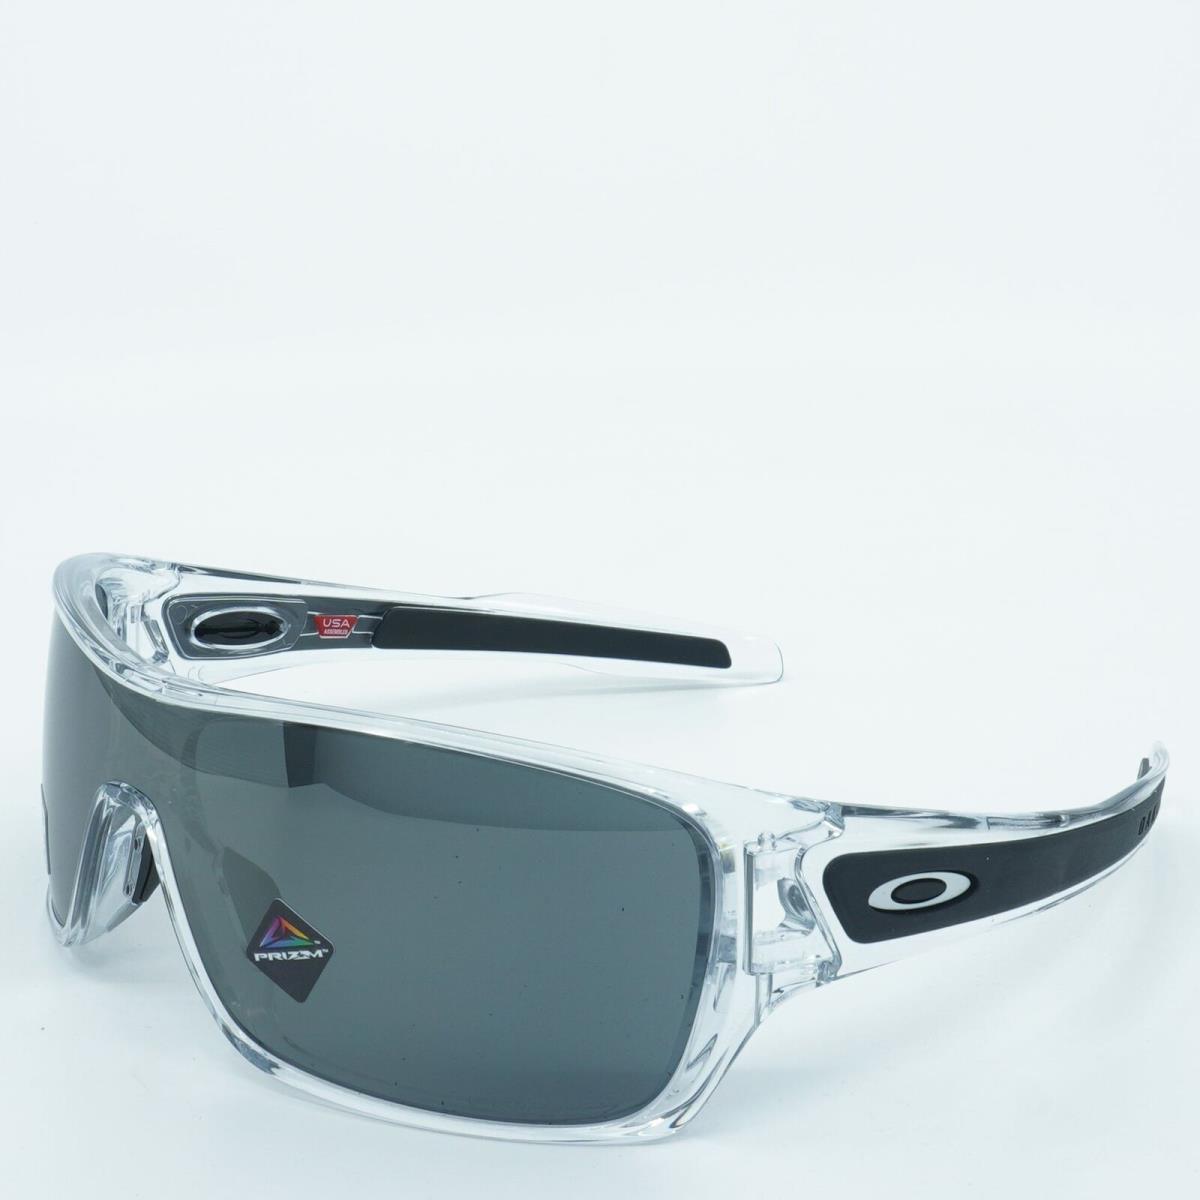 OO9307-16 Mens Oakley Turbine Rotor Polarized Sunglasses - Clear/prizm Black - Frame: Clear, Lens: Black